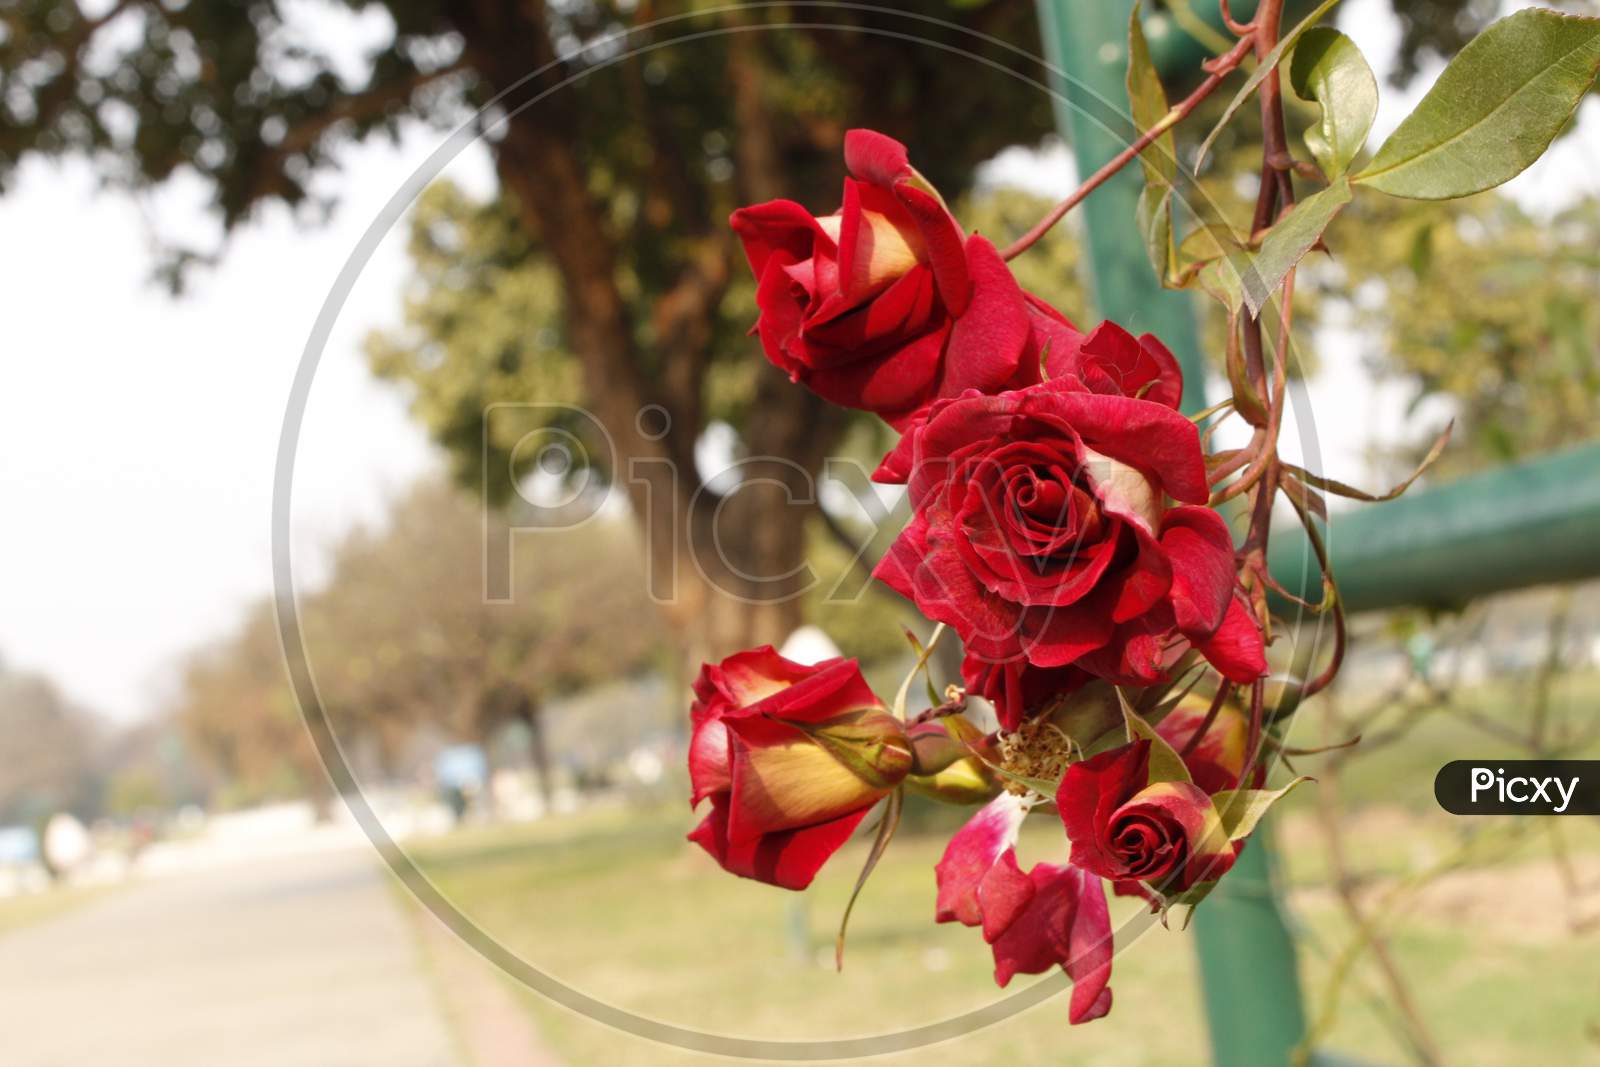 Red rose at rose garden